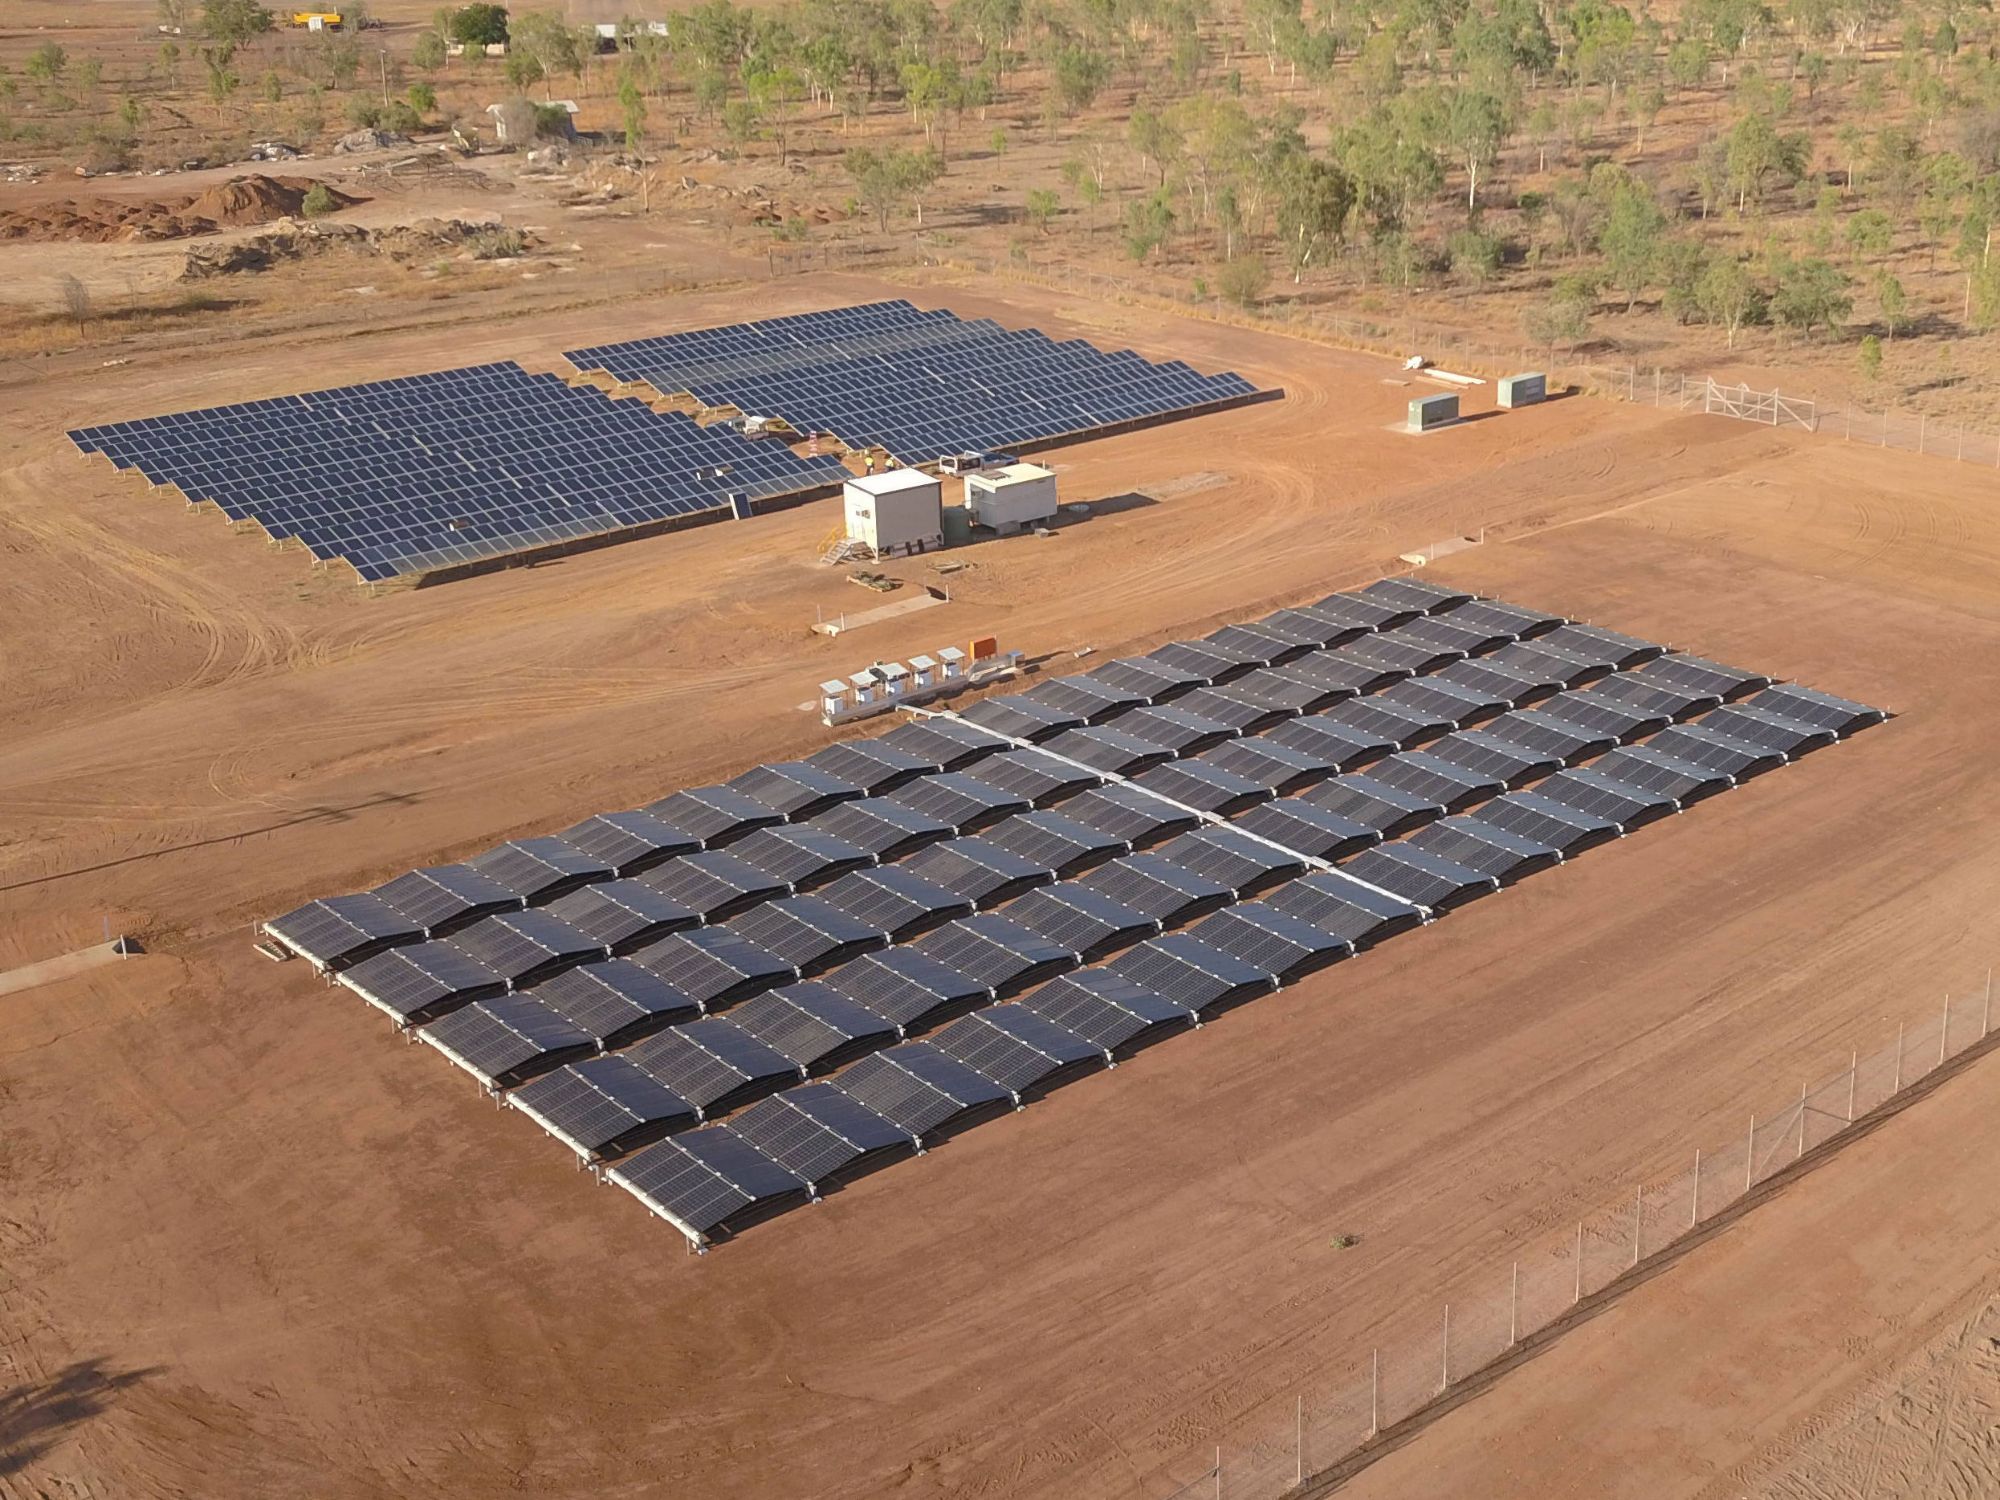 Integrating renewable energy into remote communities